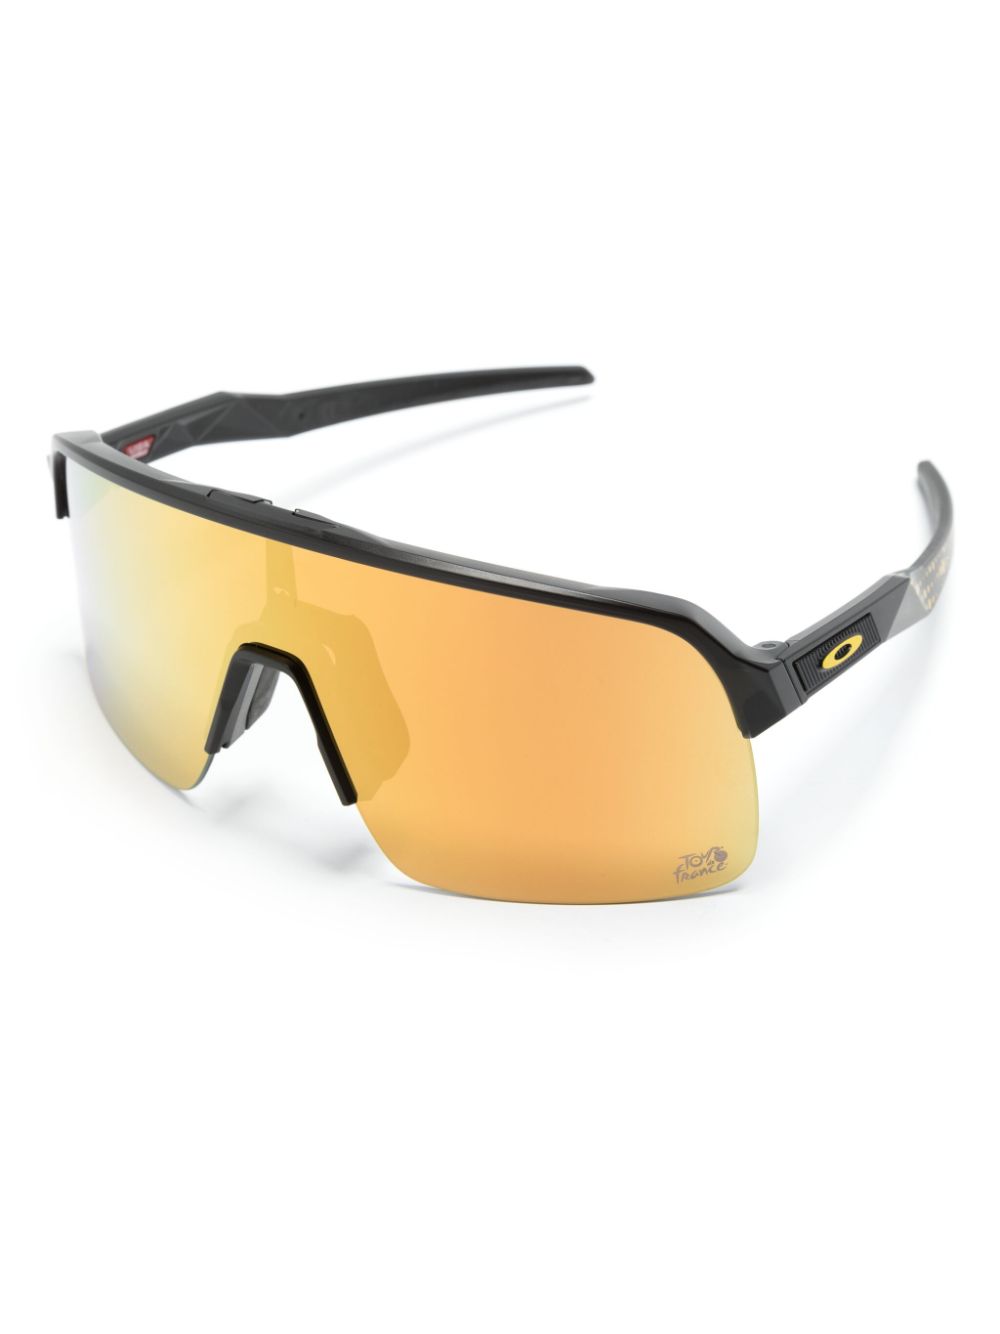 Sutro Lite shield-frame performance sunglasses<BR/><BR/>